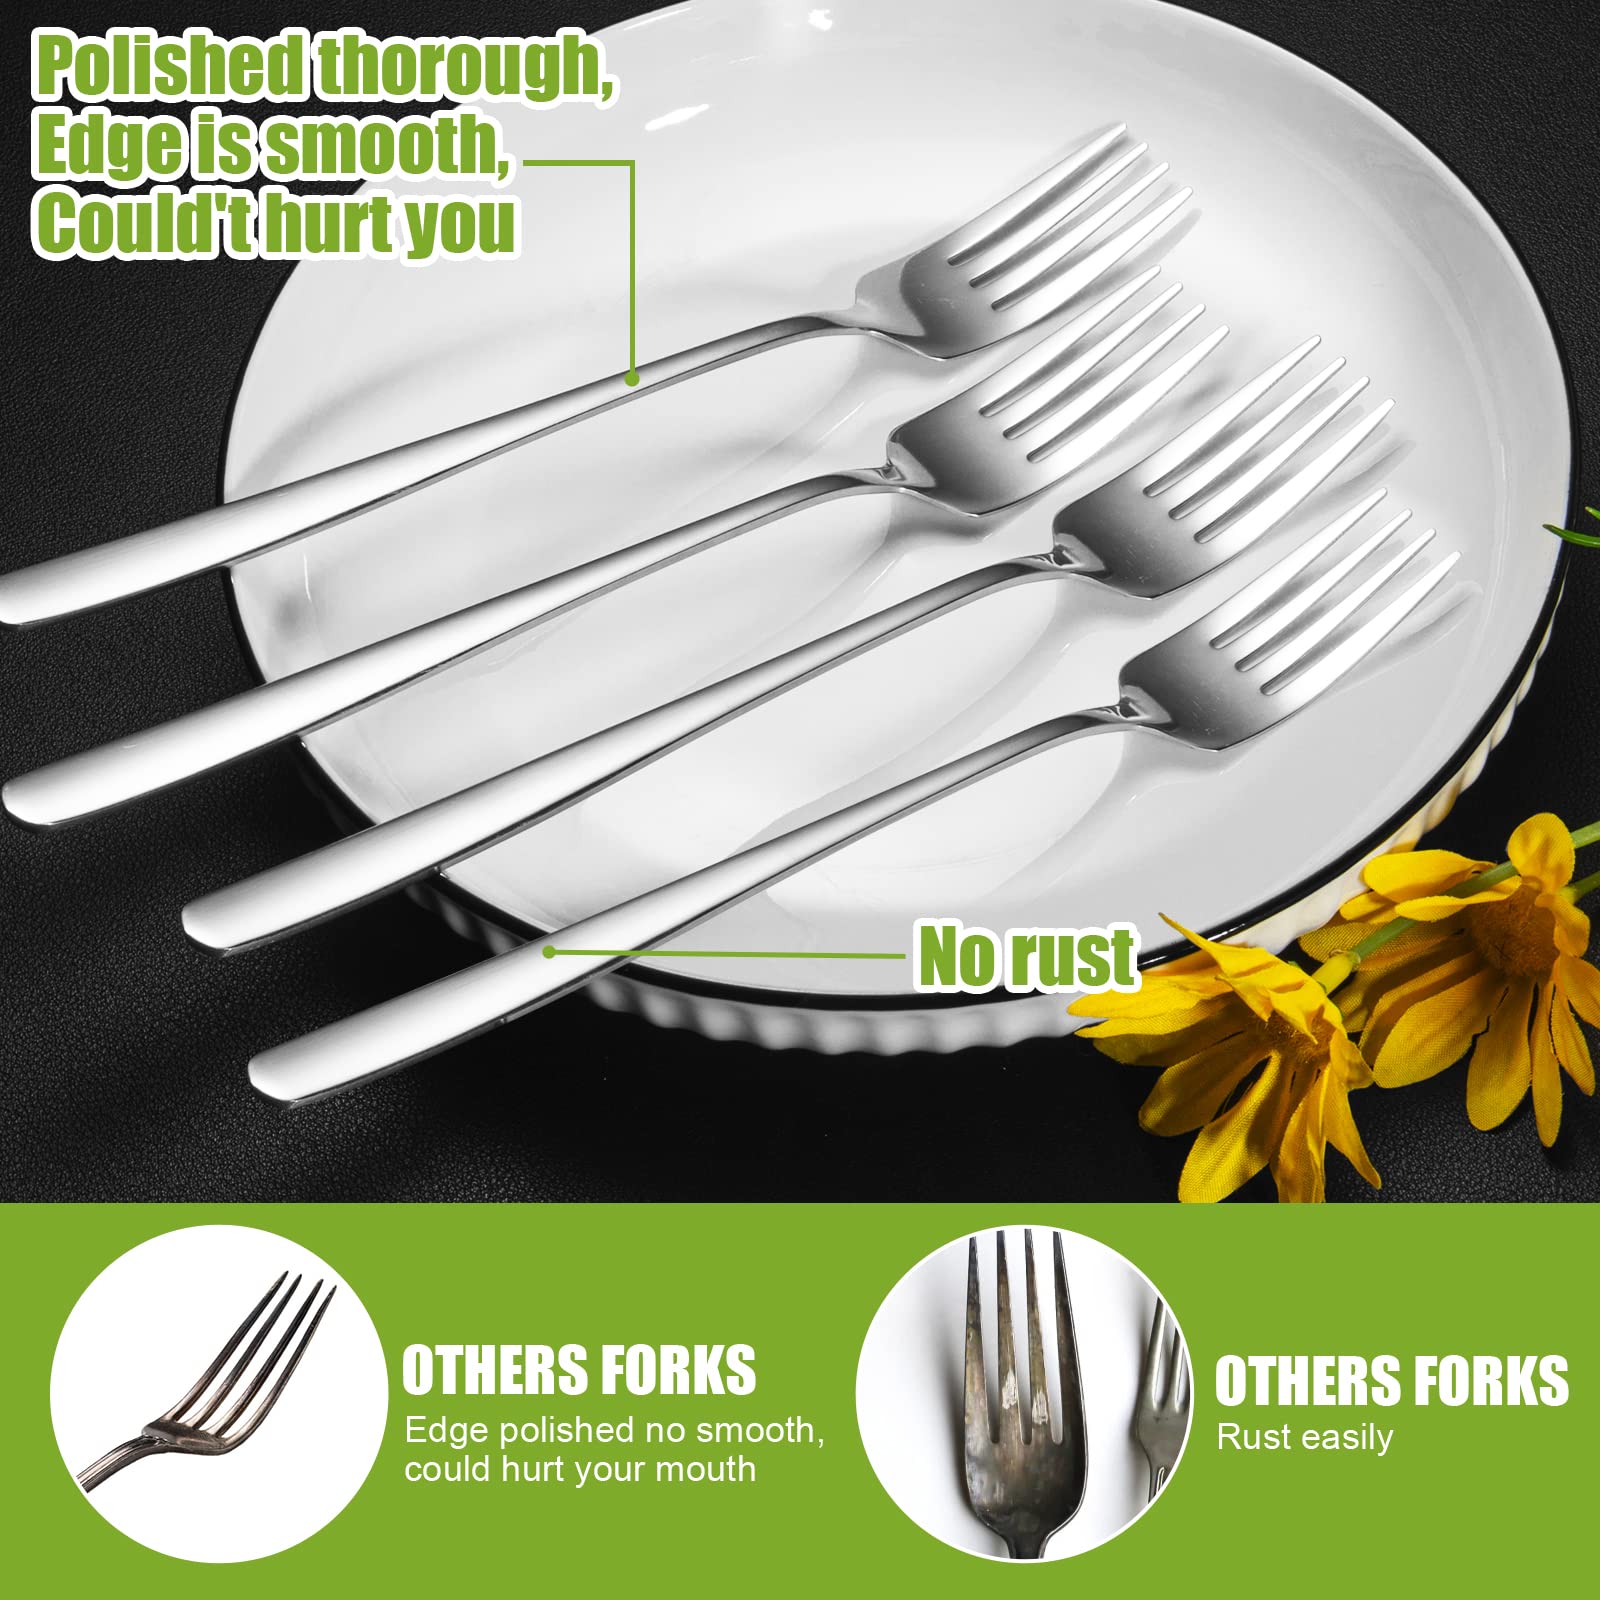 Stainless Steel Dinner Forks Set for，8-inch Modern Flatware Cutlery Forks，Food Grade Stainless Steel Flatware, Mirror-Polished & Dishwasher Safe, Use for Home Kitchen, Party or Restaurant